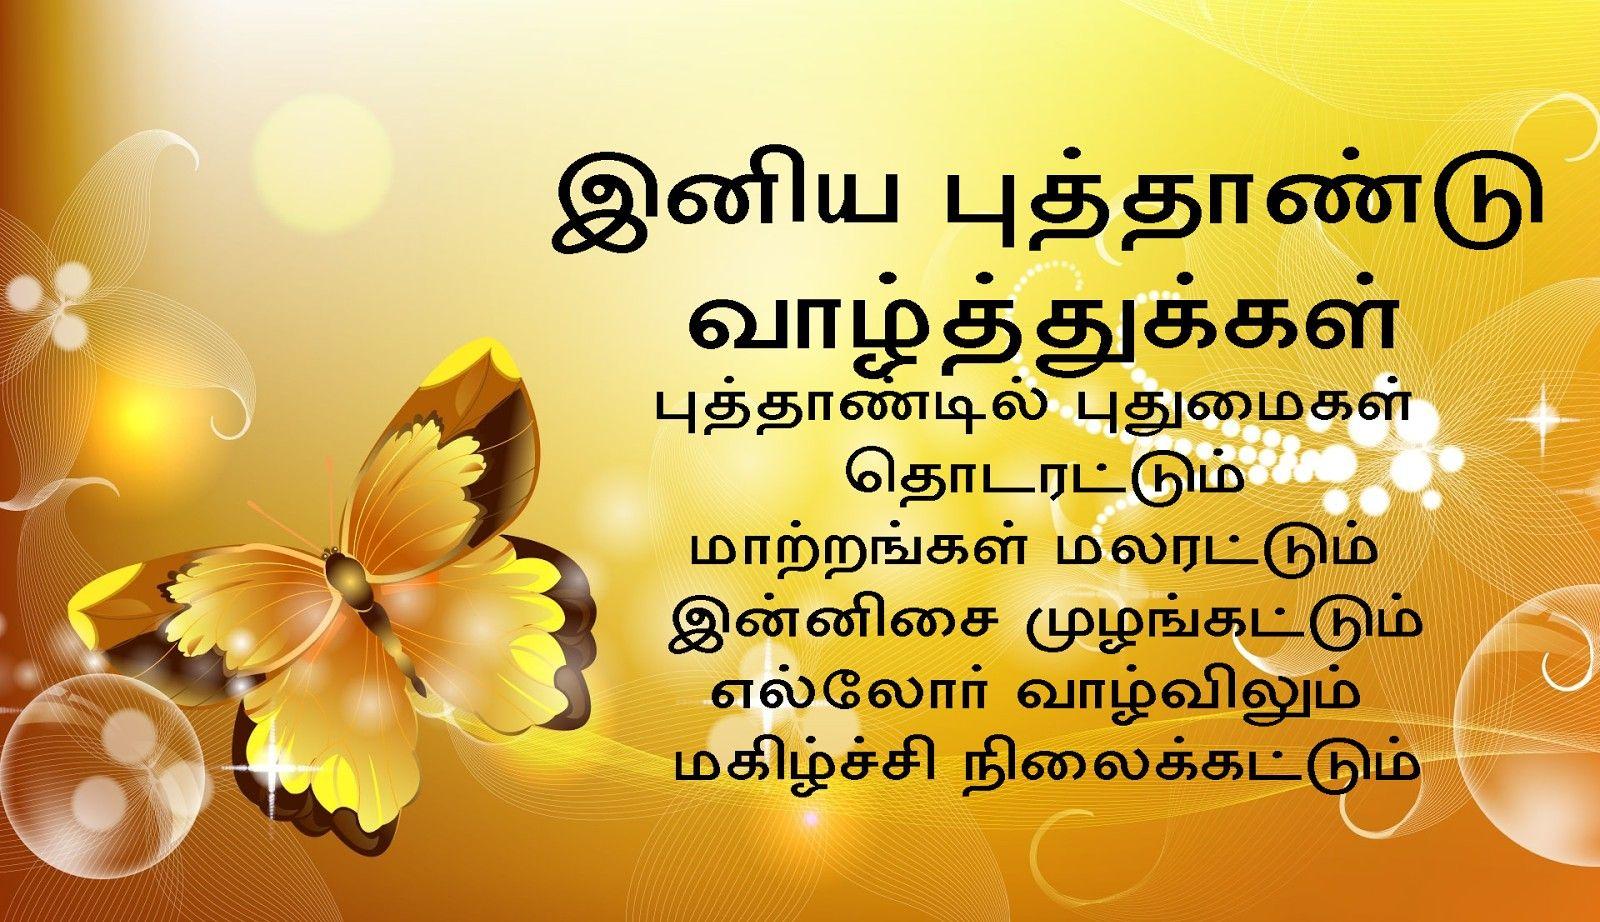 Wife Birthday Wishes Tamil Kavithai - Animaltree